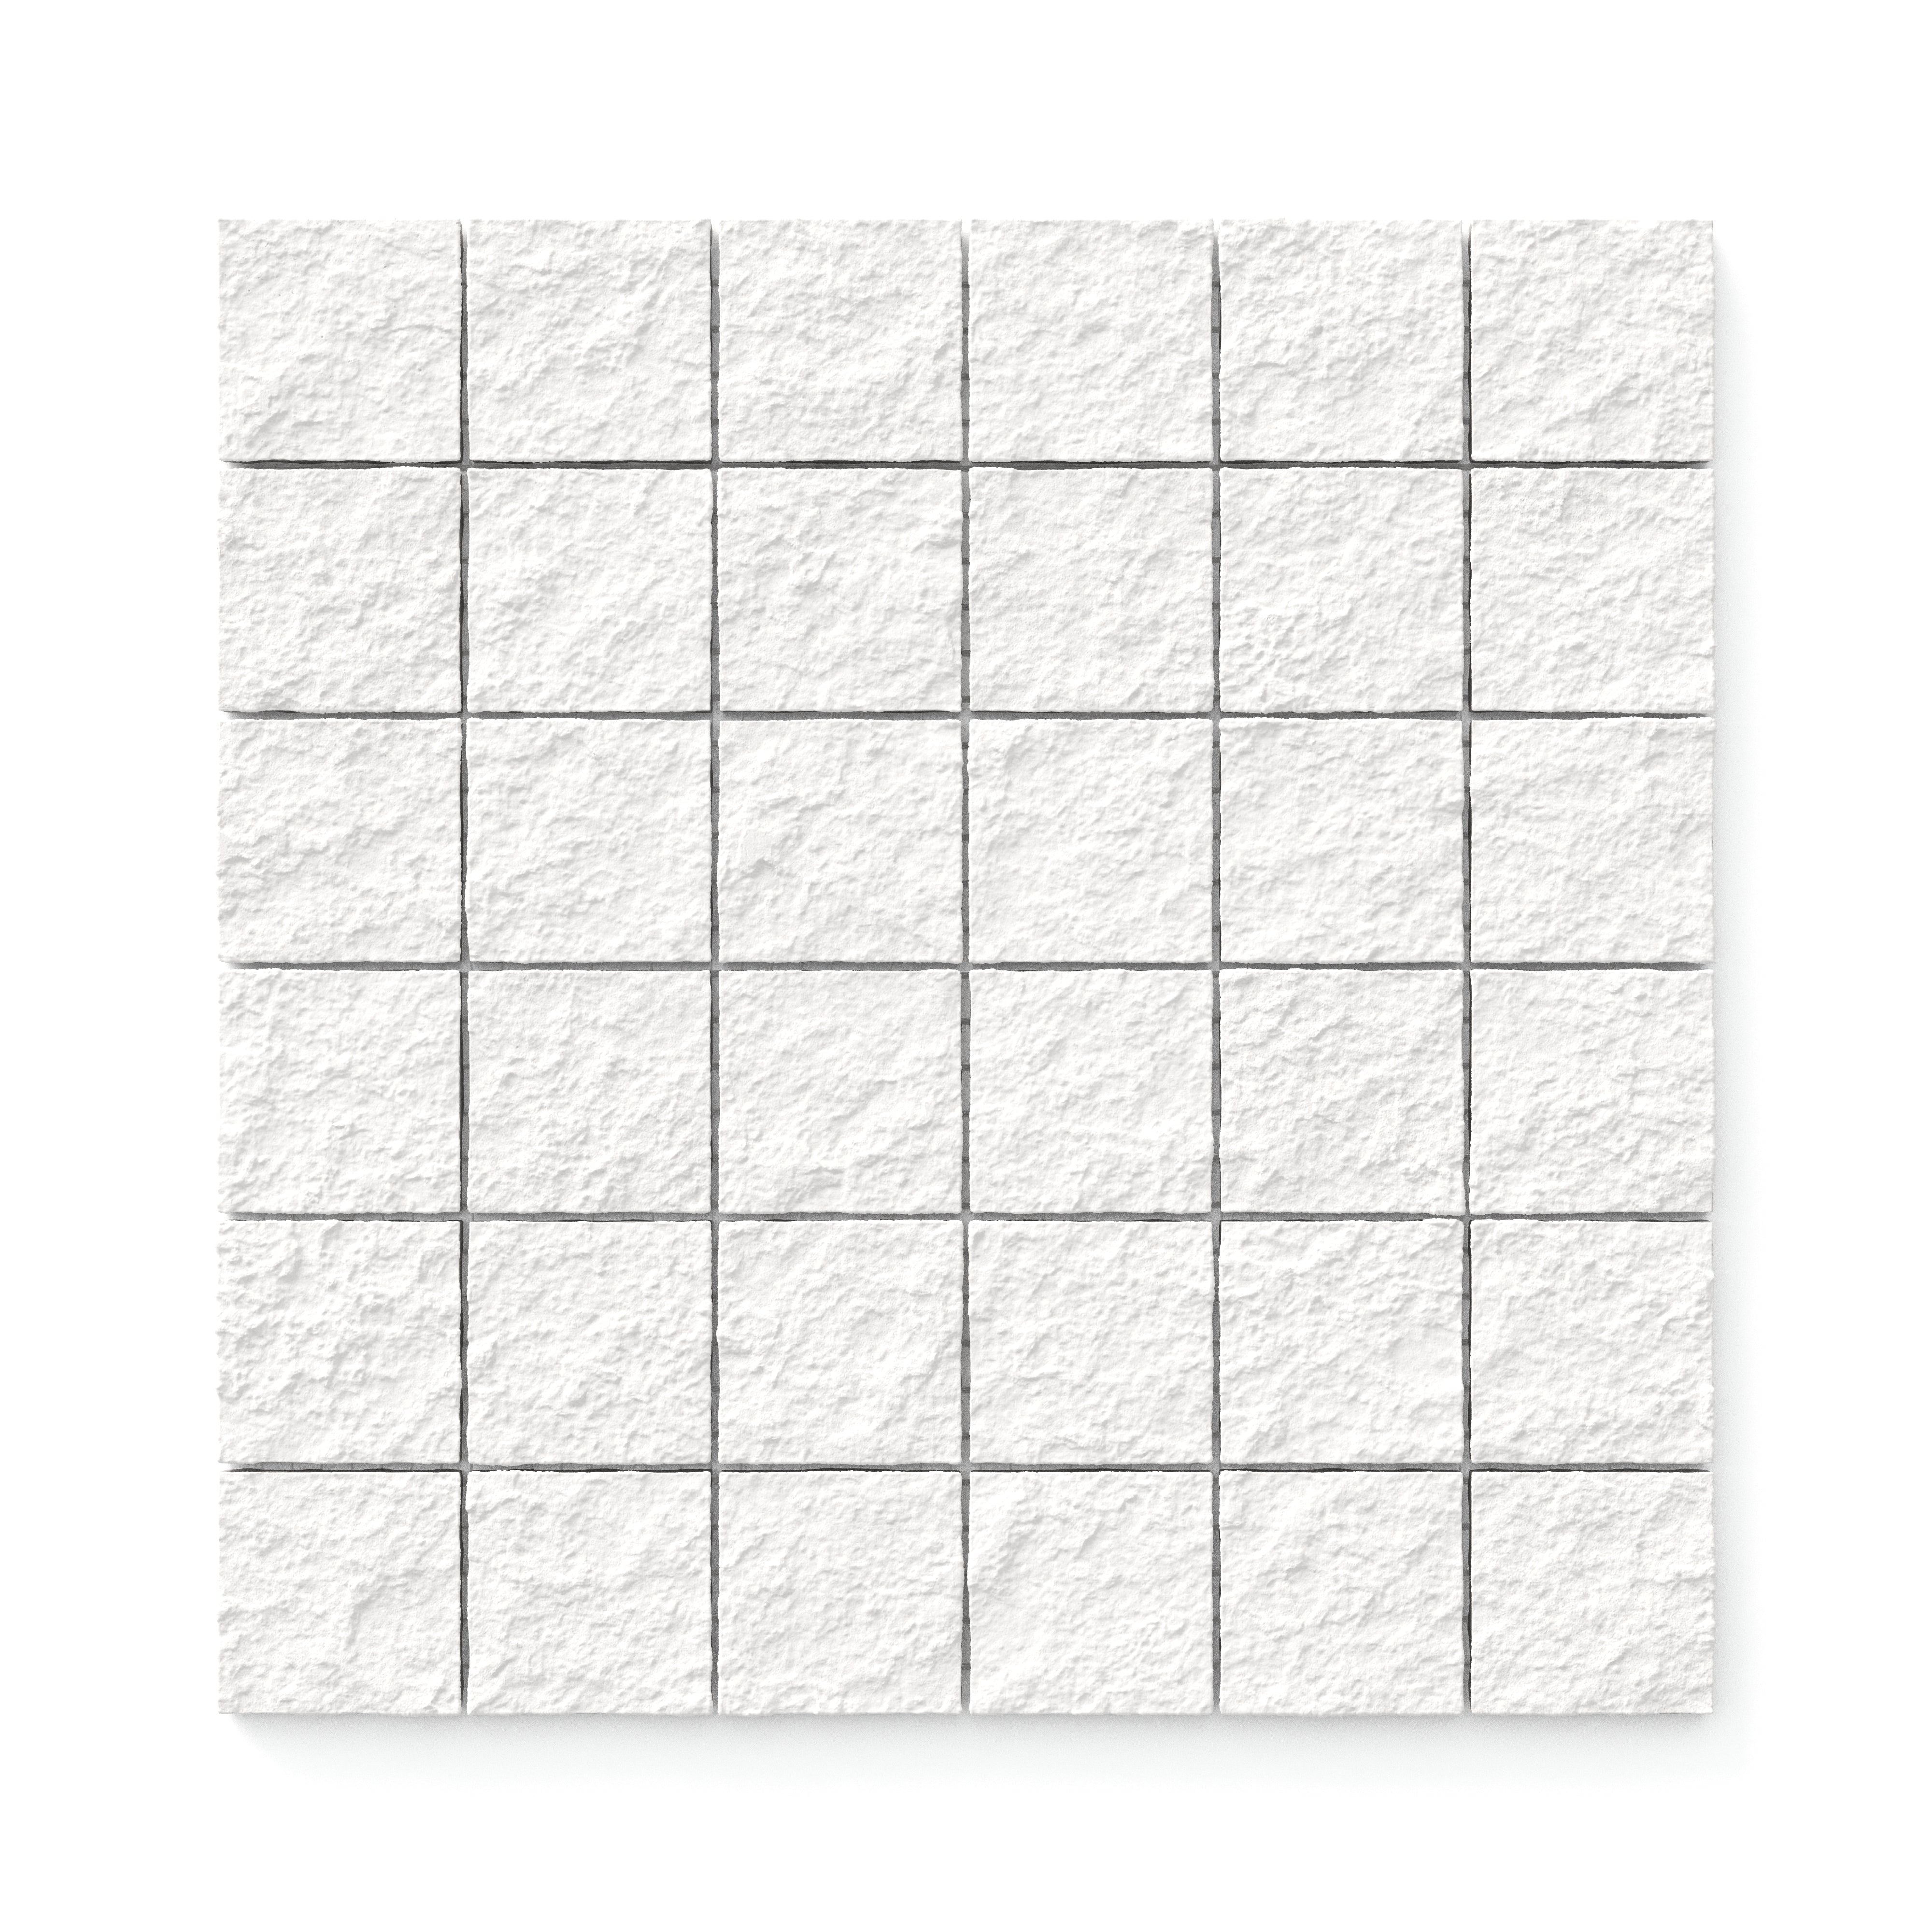 Palmer 2x2 Raw Porcelain Mosaic Tile in White